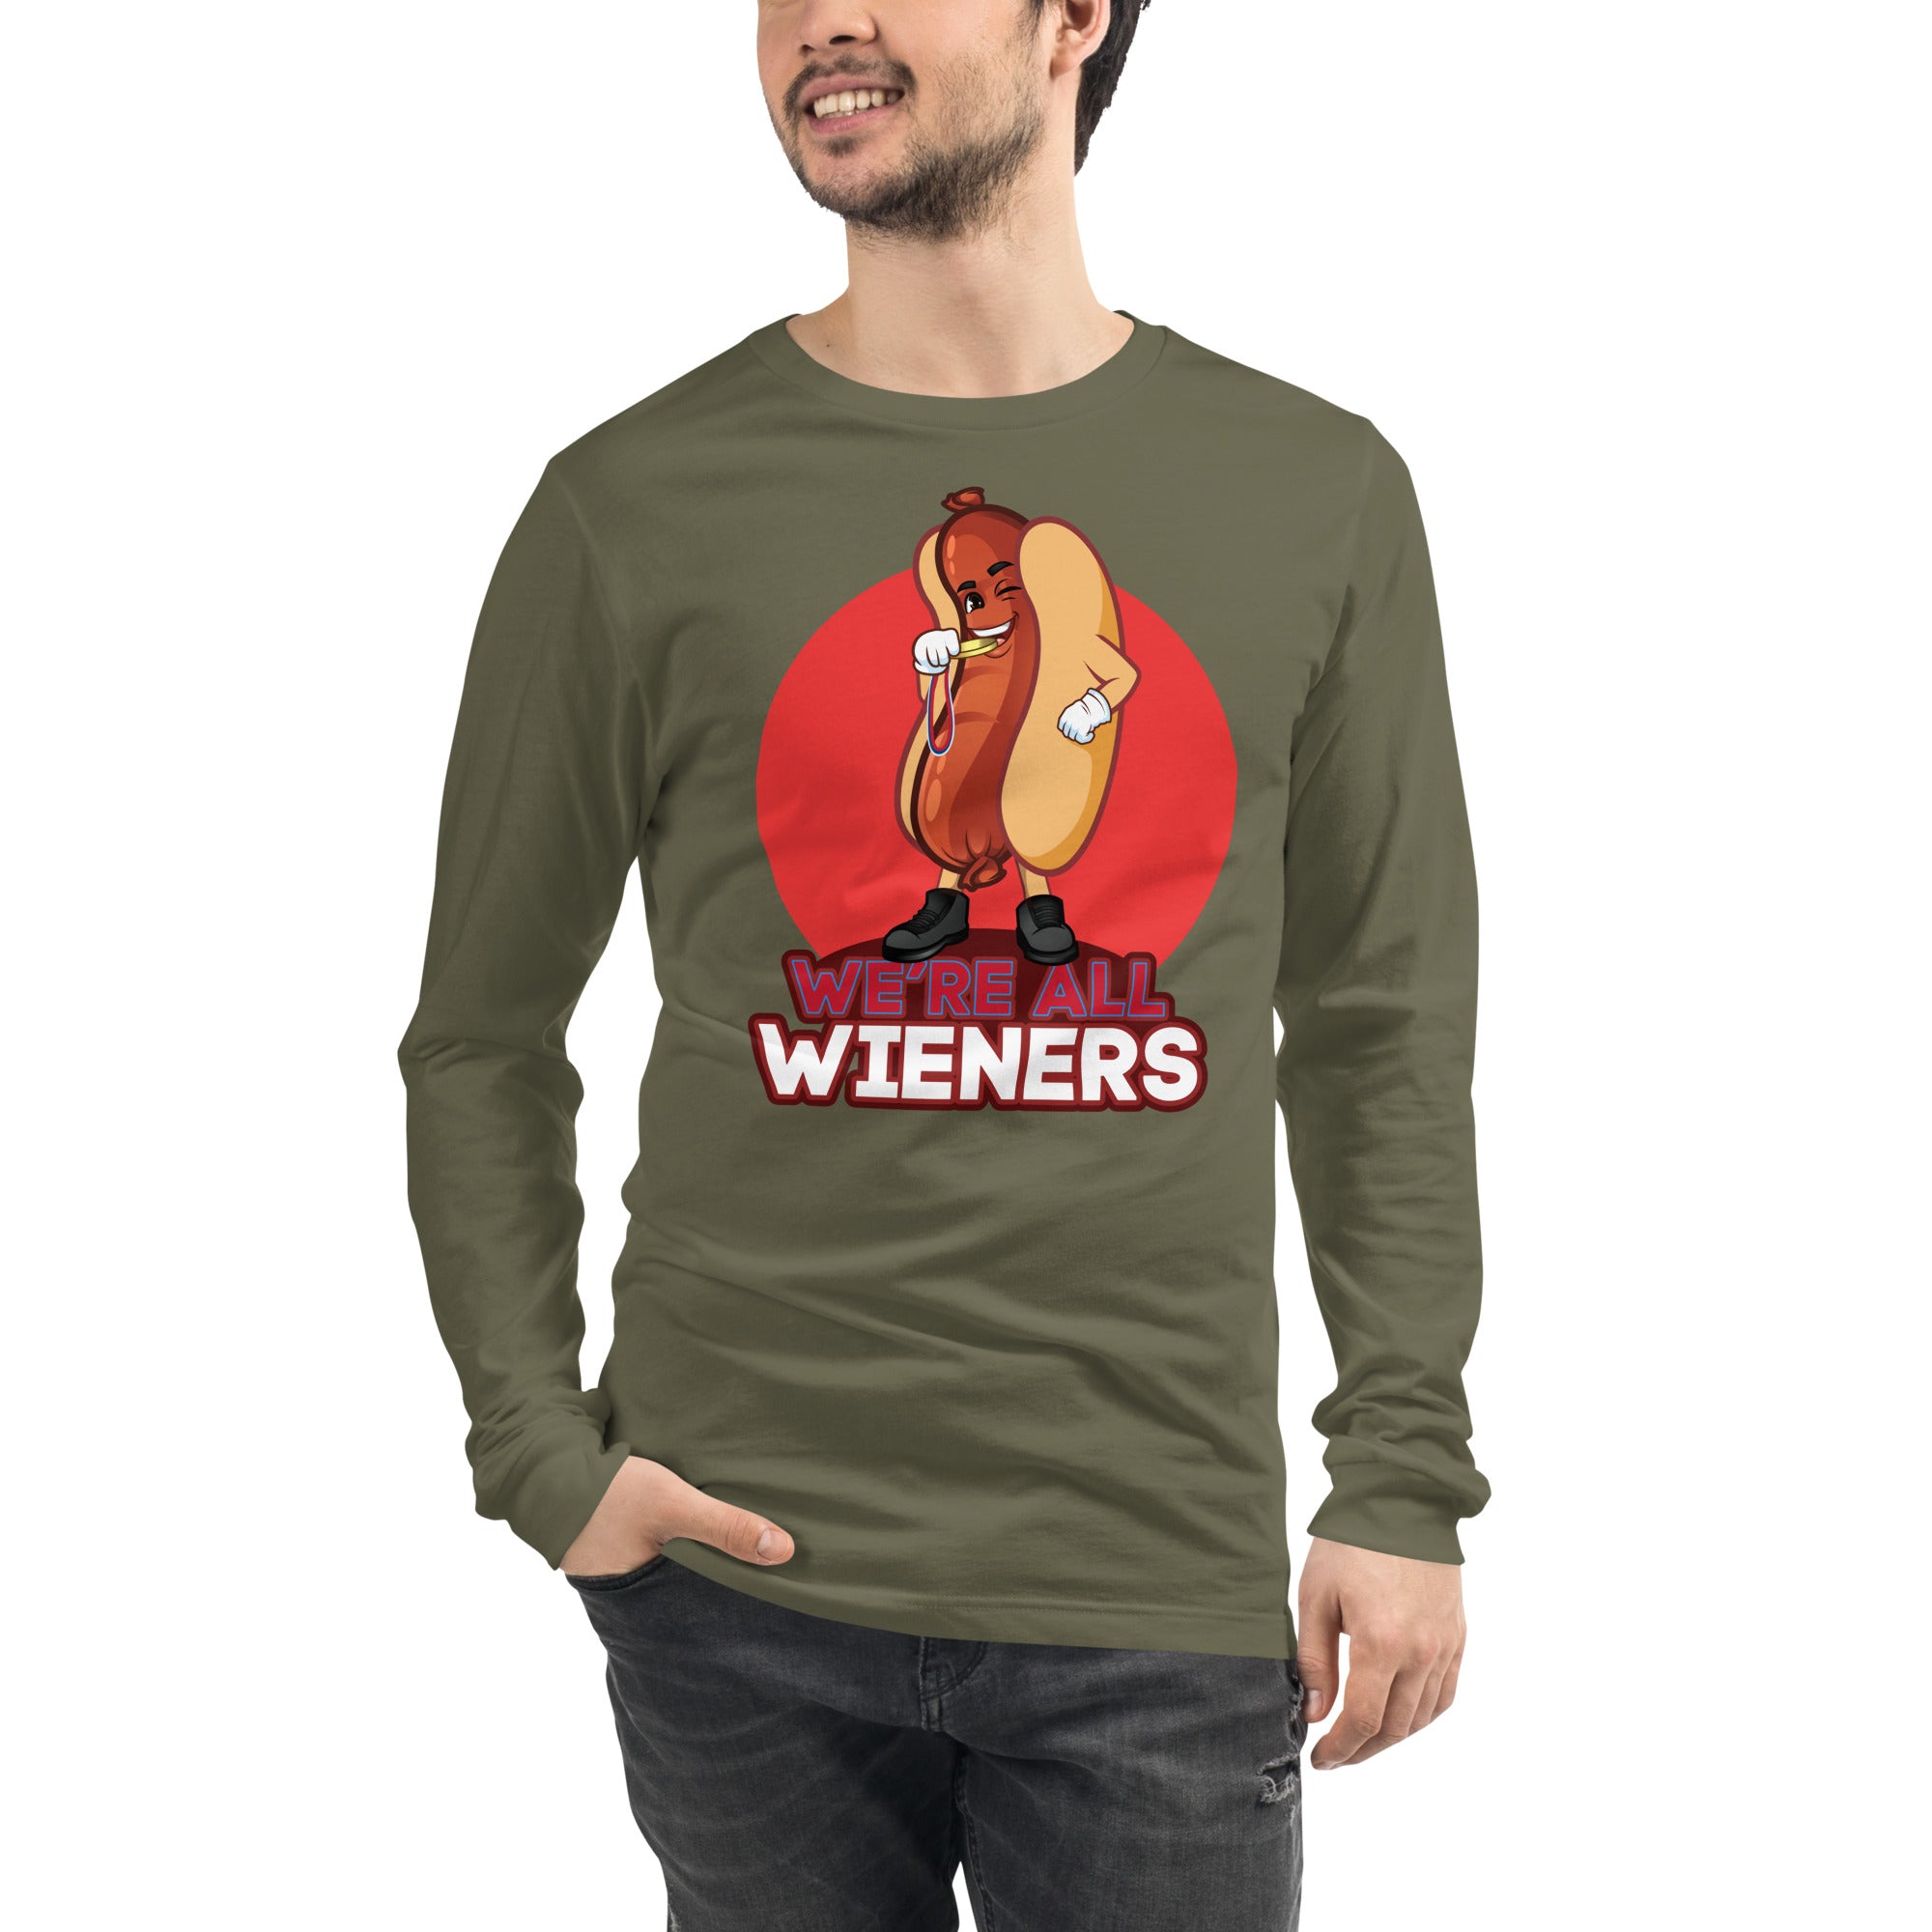 We're All Wiener's Men's Select Long Sleeve - Red